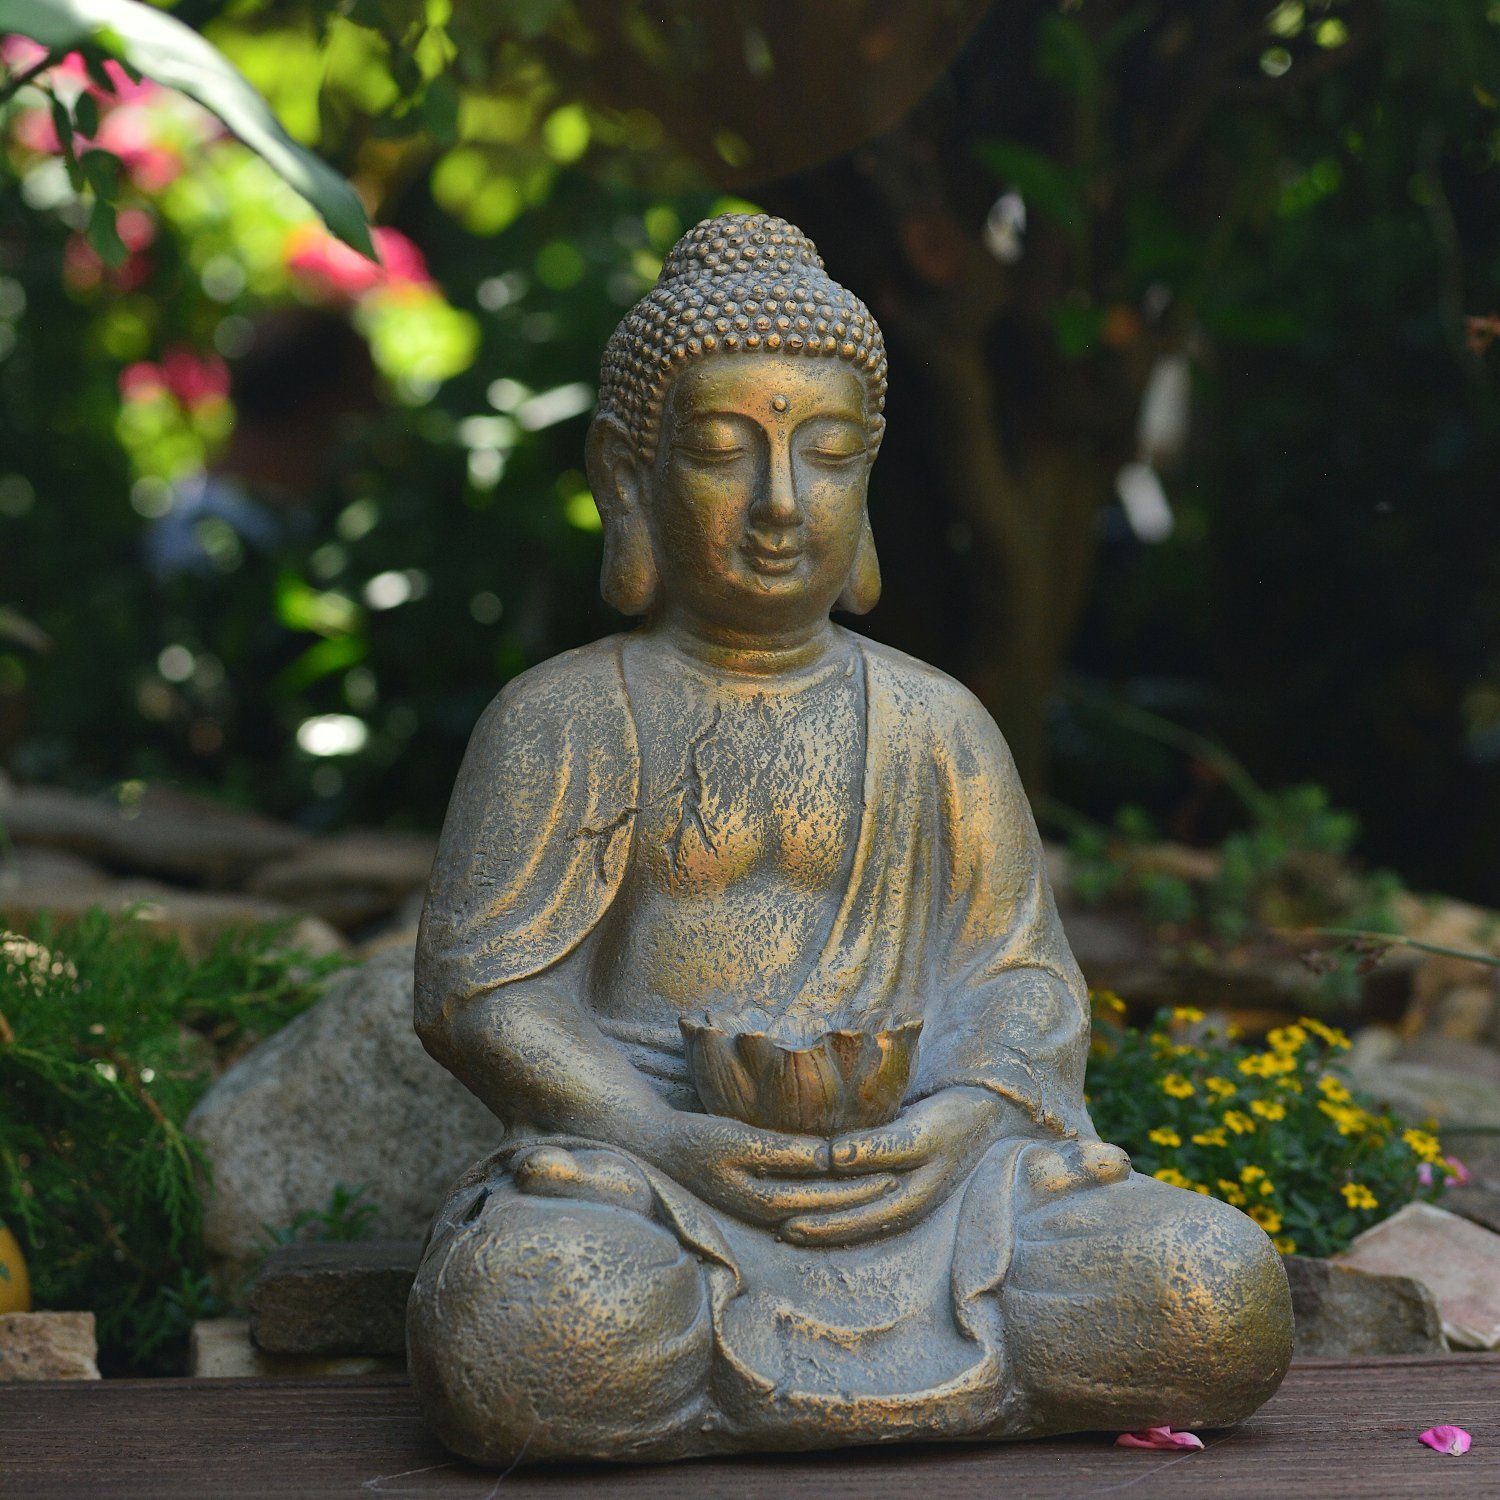 INtrenDU Gartenfigur Garten Buddha Figur 44cm mit Solarbeleuchtung und Sensorautomatik, Sensorautomatik